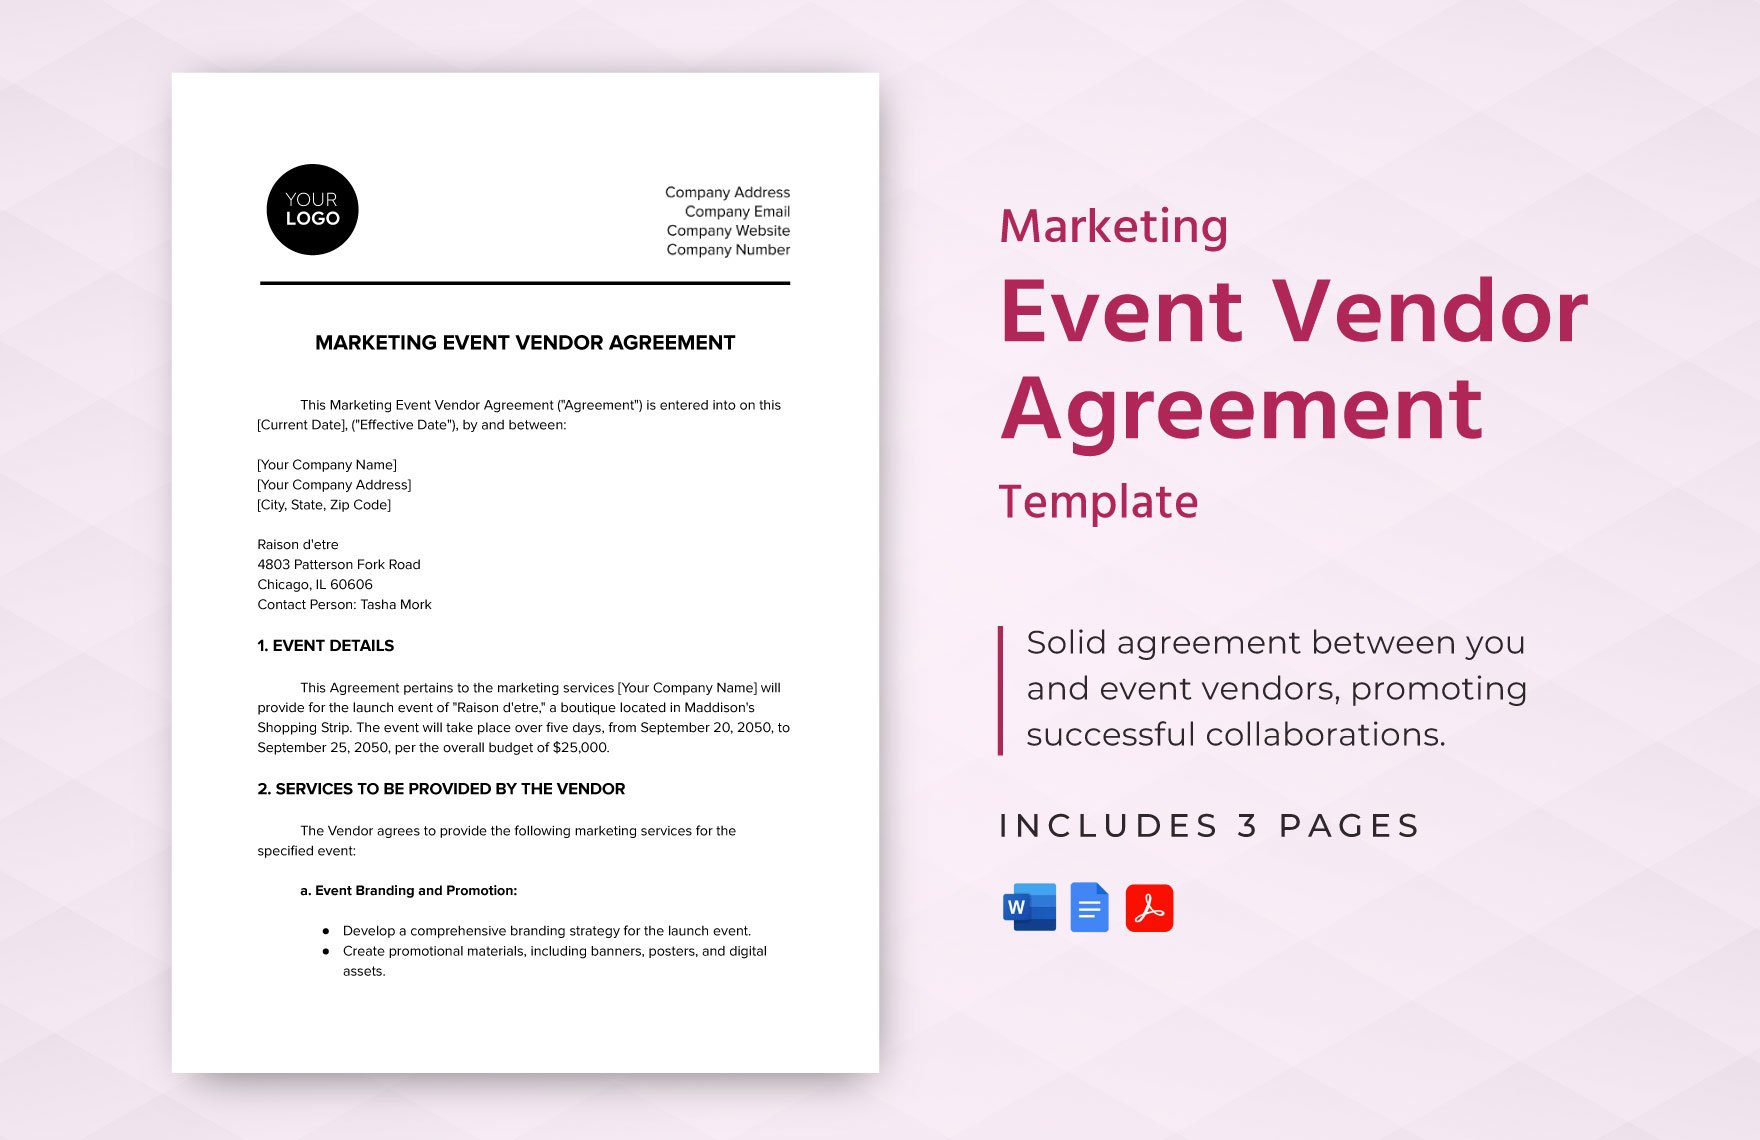 Marketing Event Vendor Agreement Template in Word, Google Docs, PDF